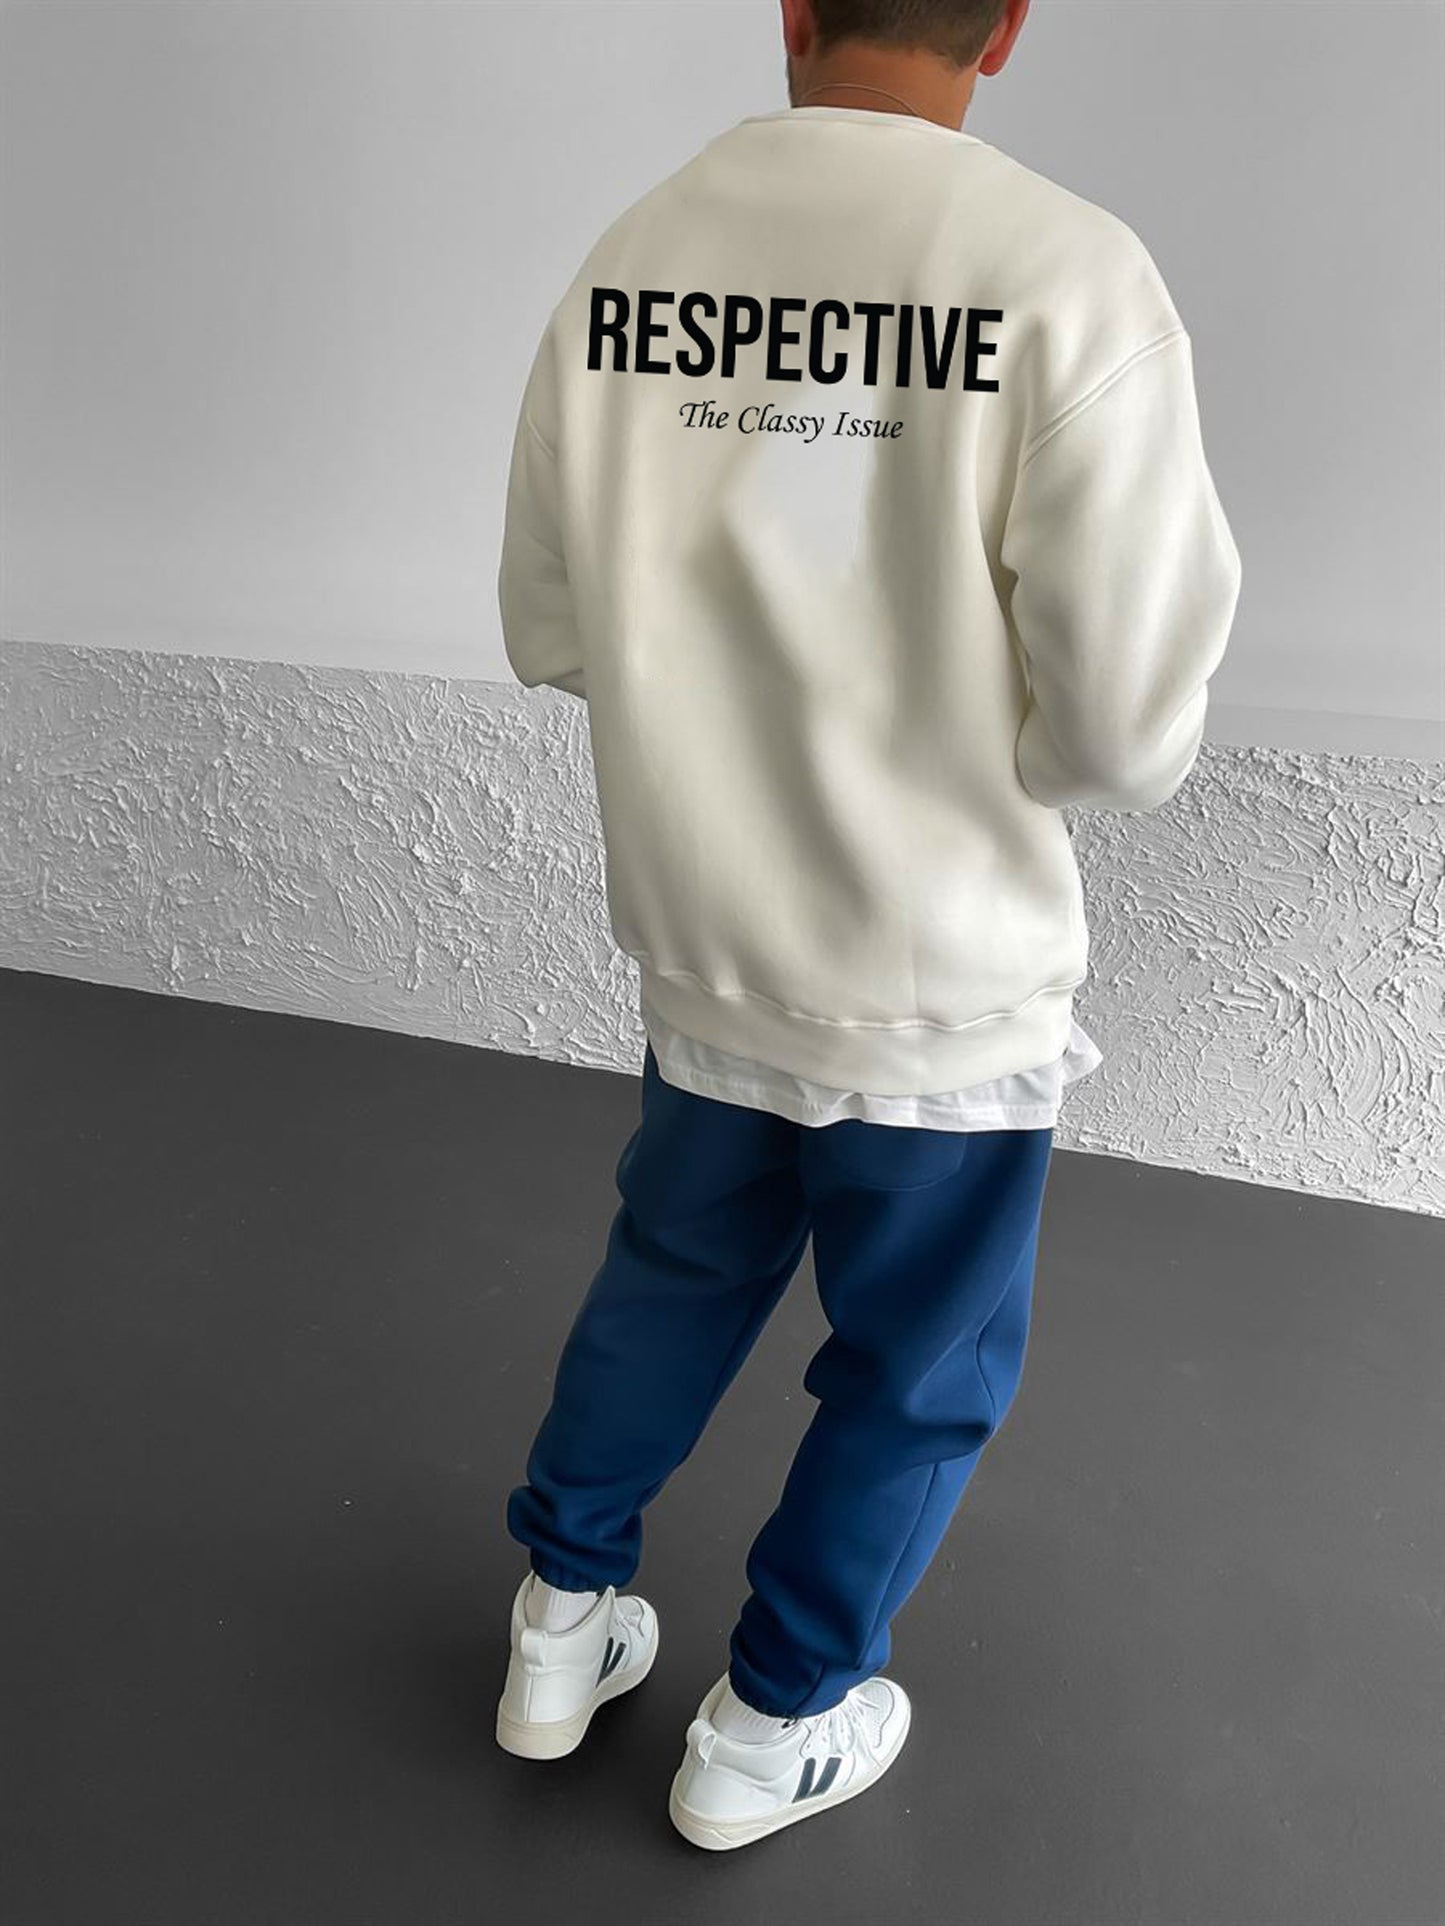 Off-White "Respective " Printed Oversize Sweatshirt